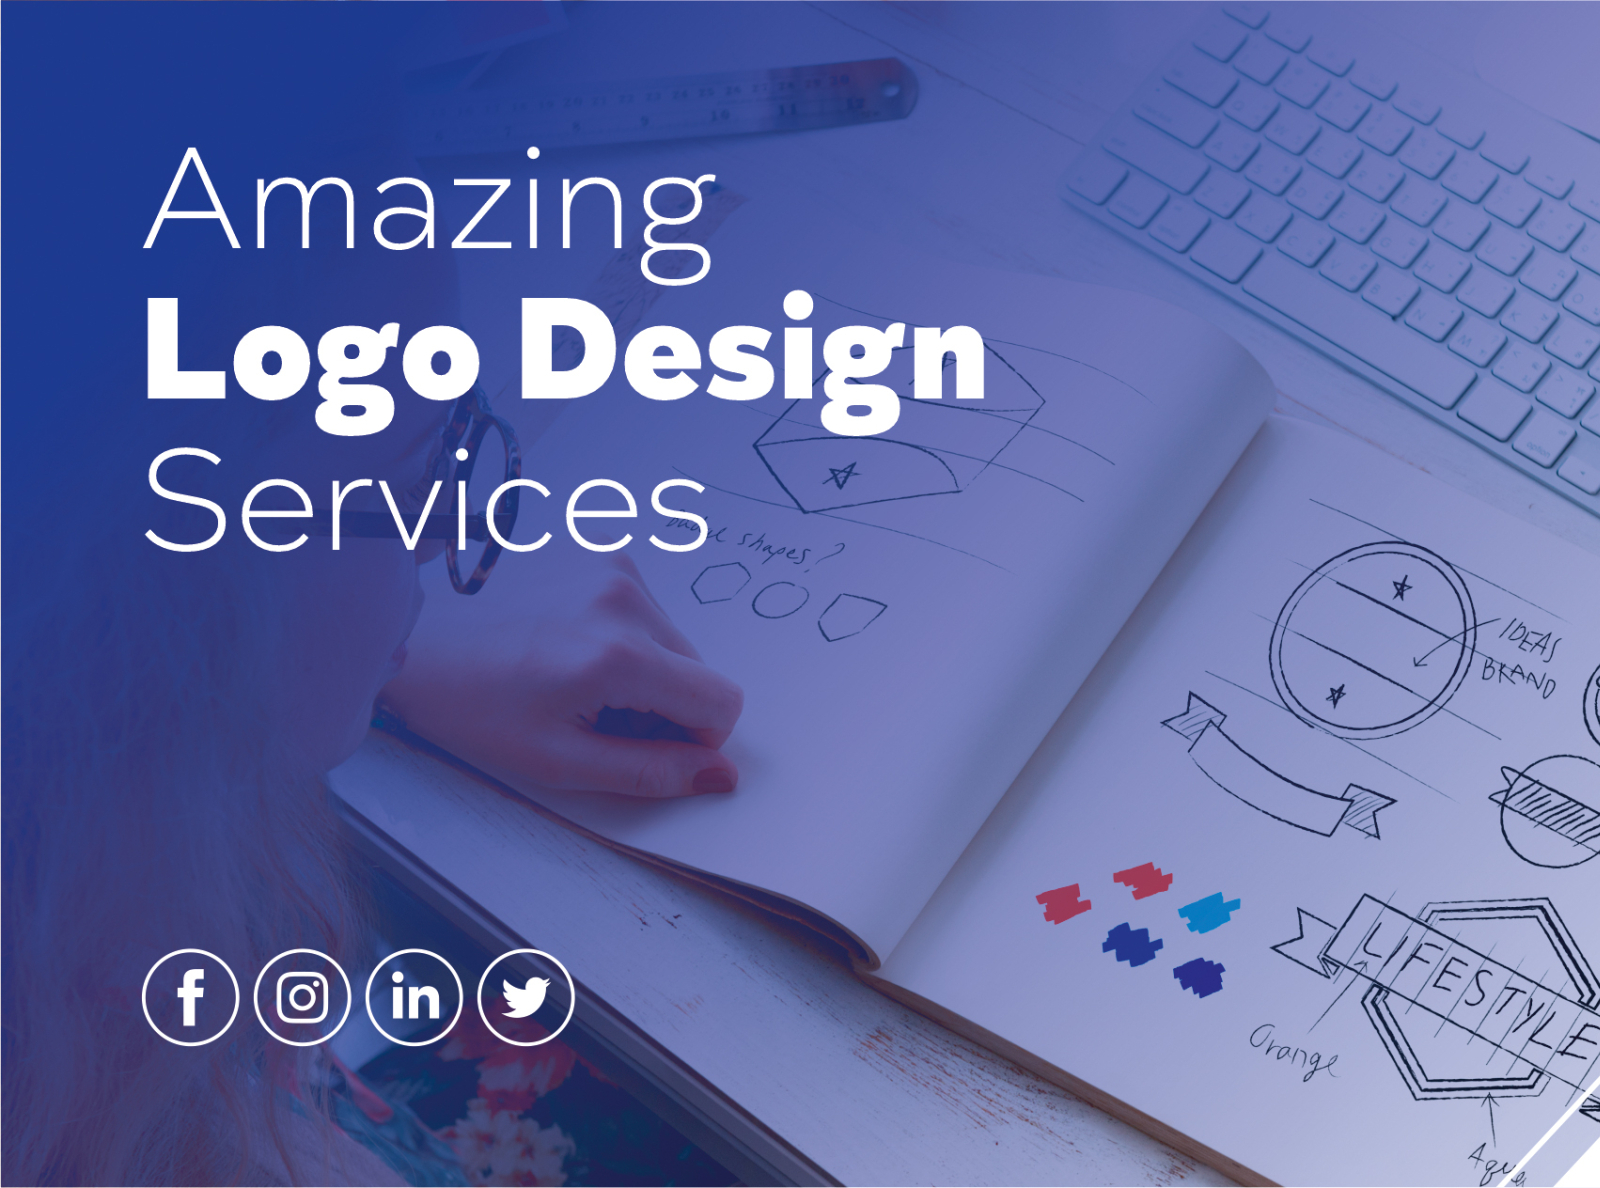 Amazing Logo Design Services by iBigDo Tech on Dribbble